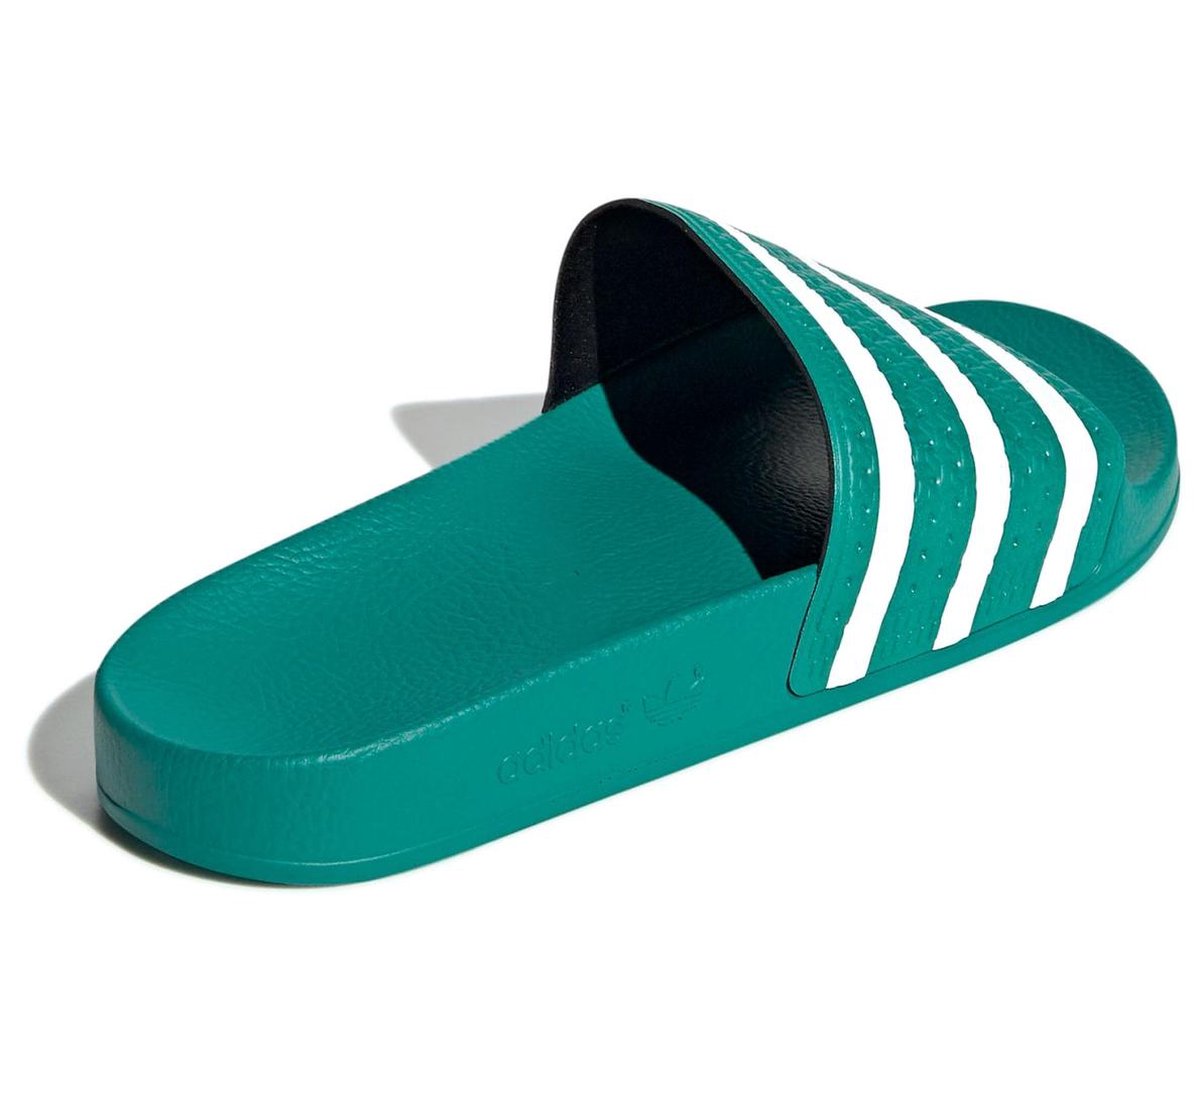 Buy > groene adidas slippers > in stock